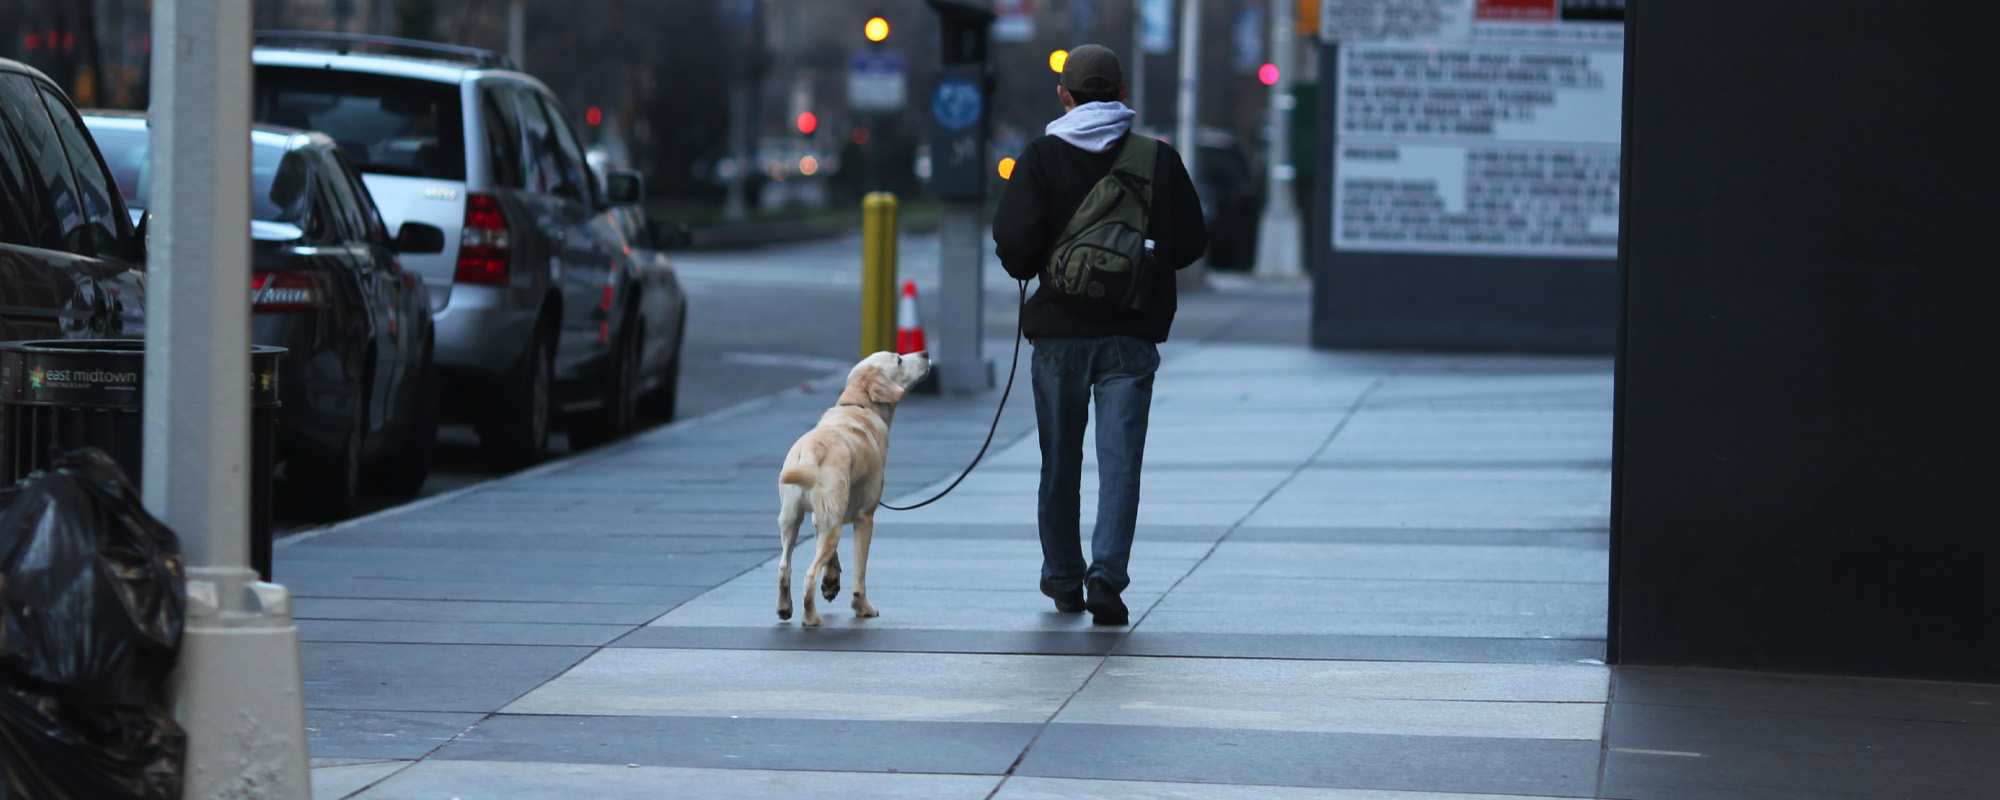 man and dog walking on new york sidewalk in winter